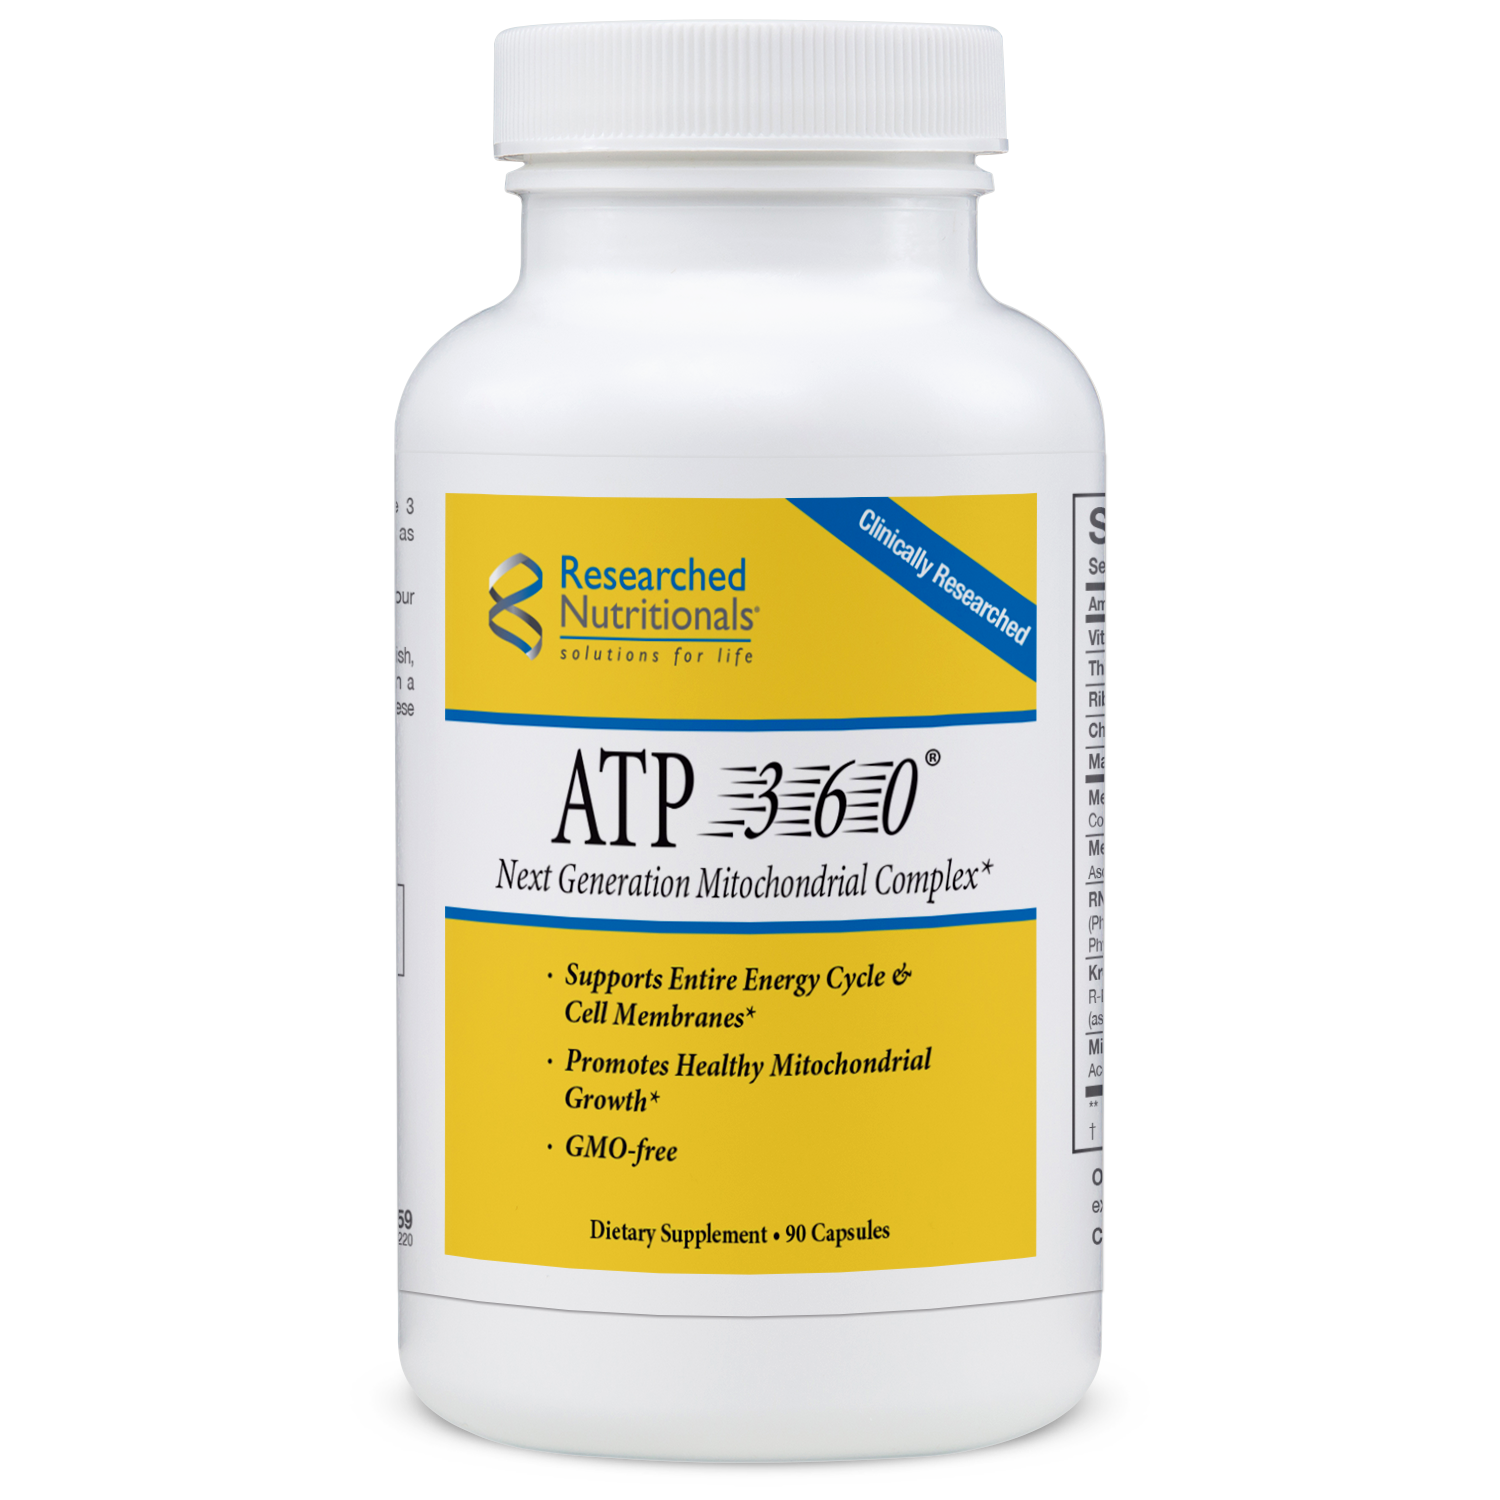 ATP 360®